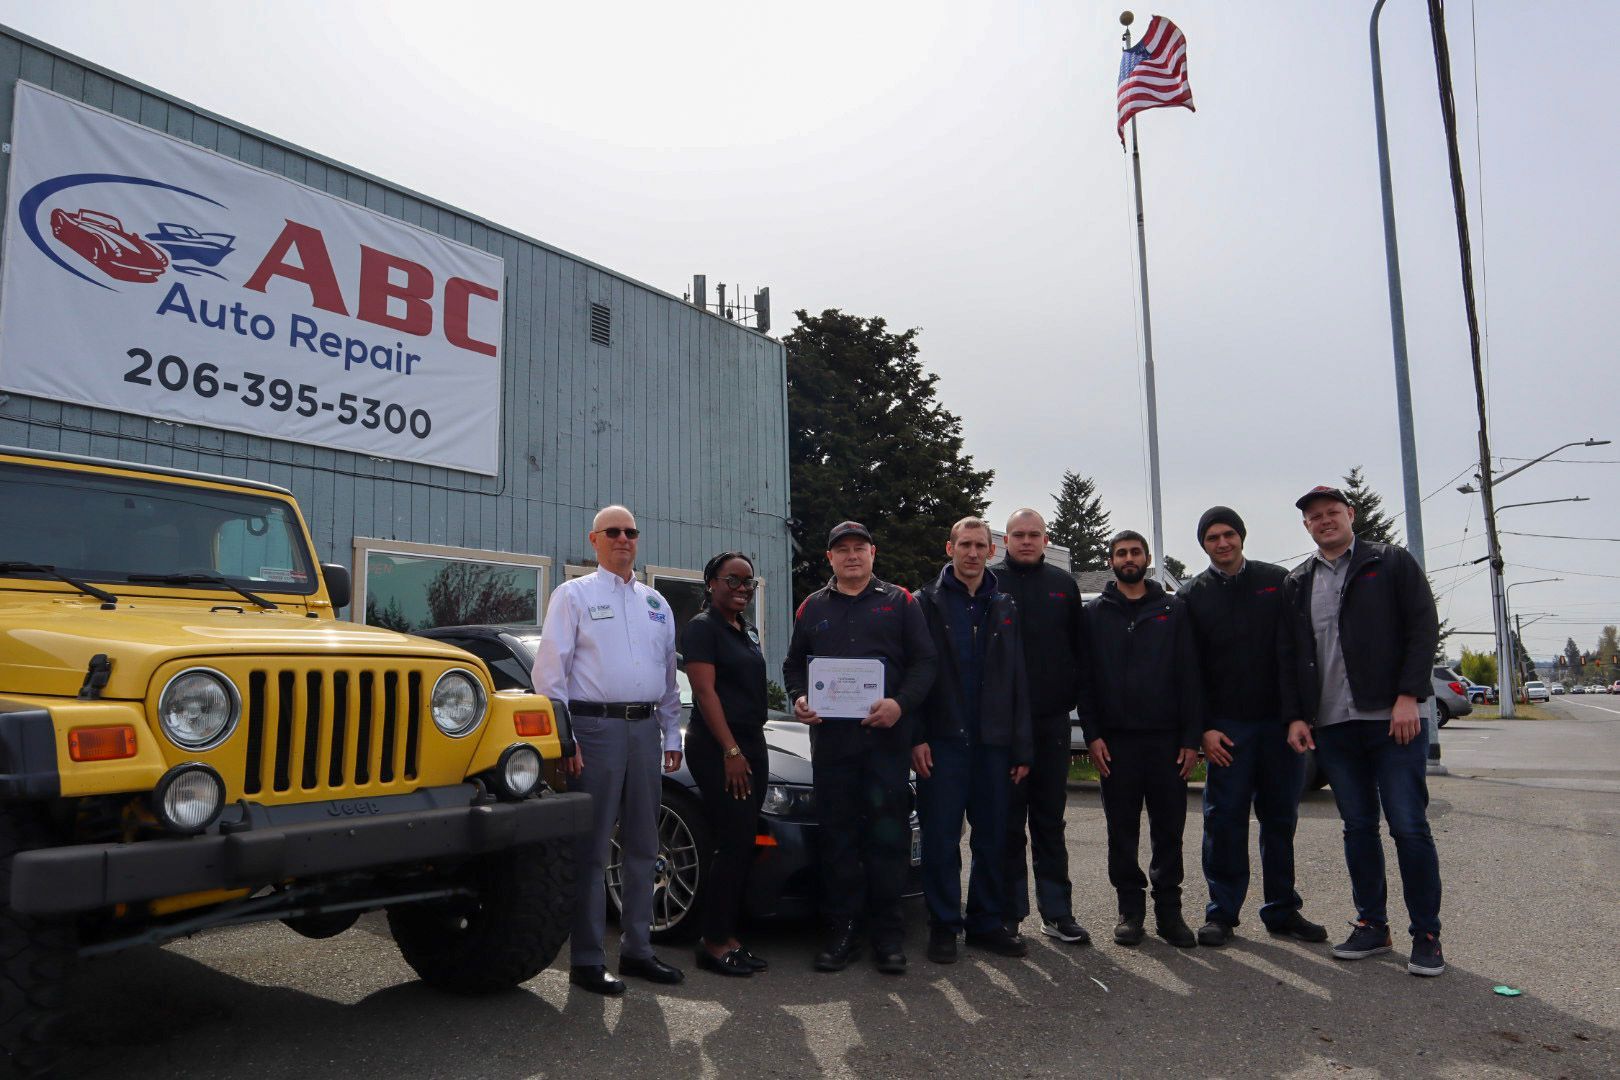 Val receives Patriot Award, ABC Auto Repair in Burien Washington 